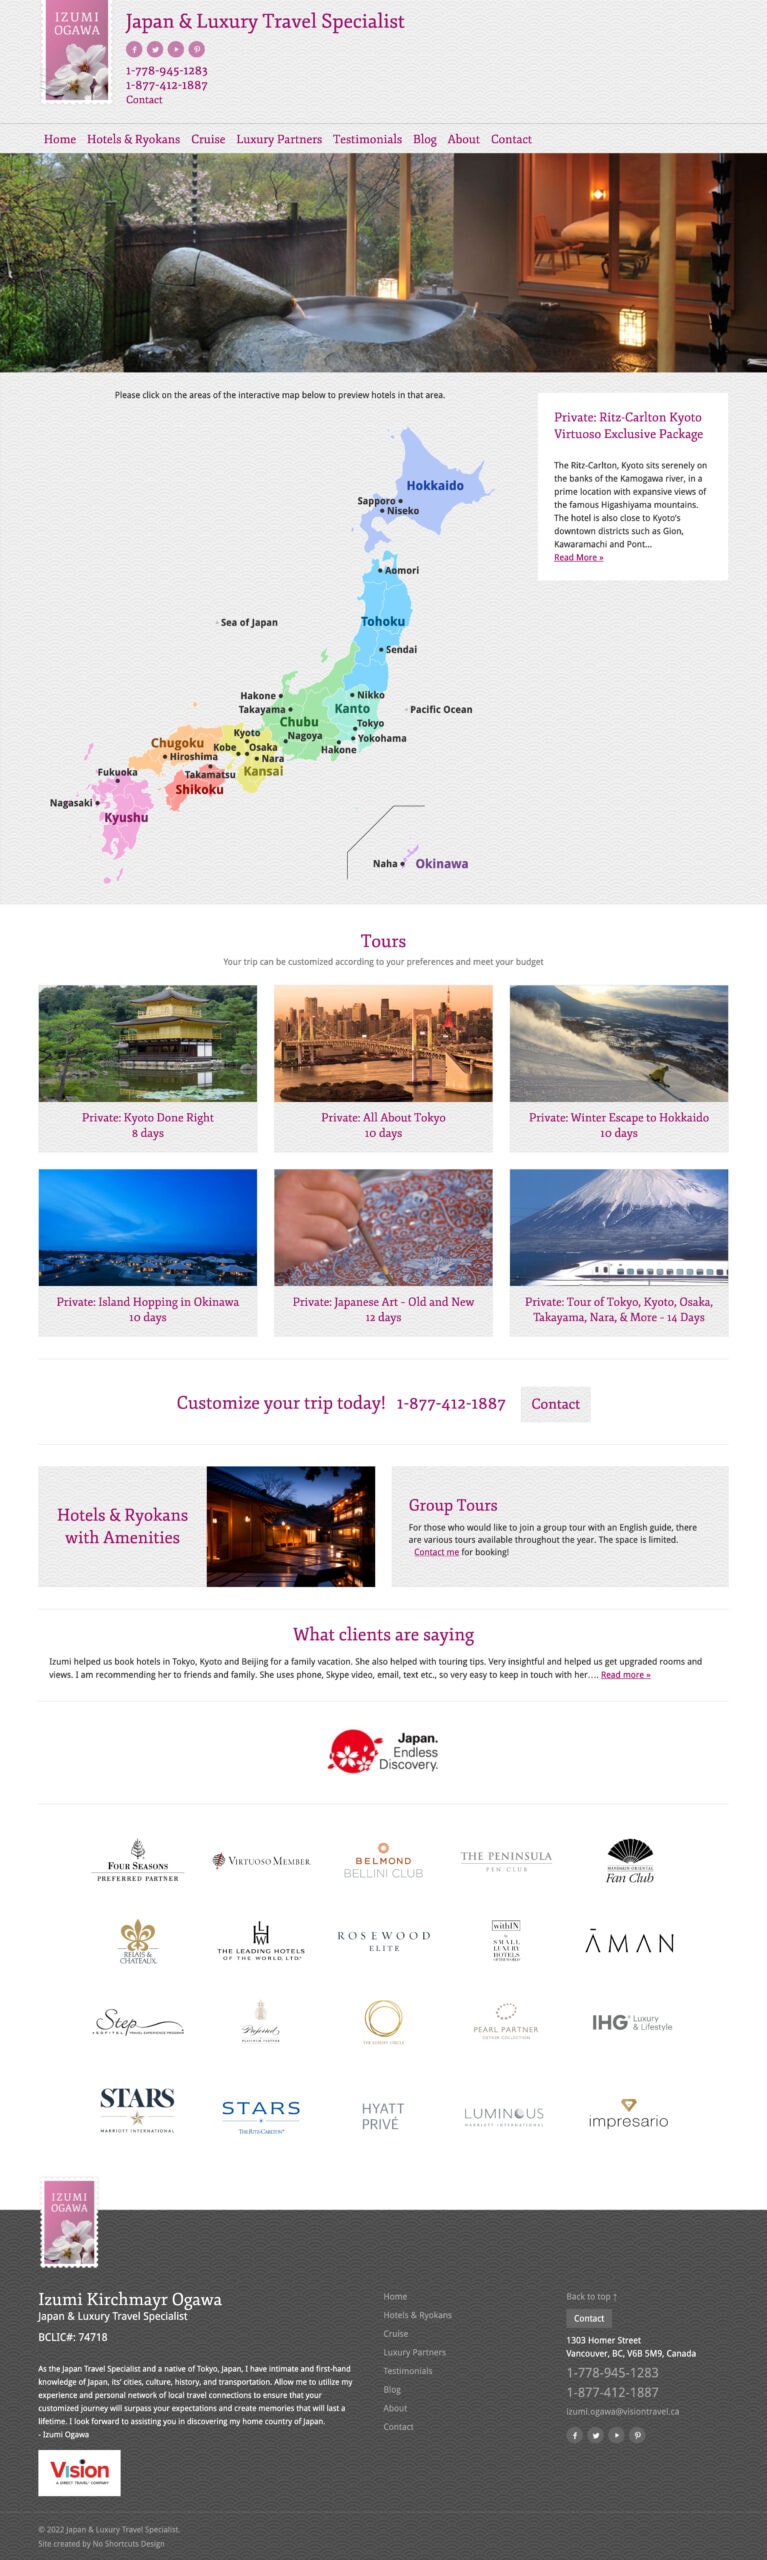 Japan & Luxury Travel Specialist - website - home